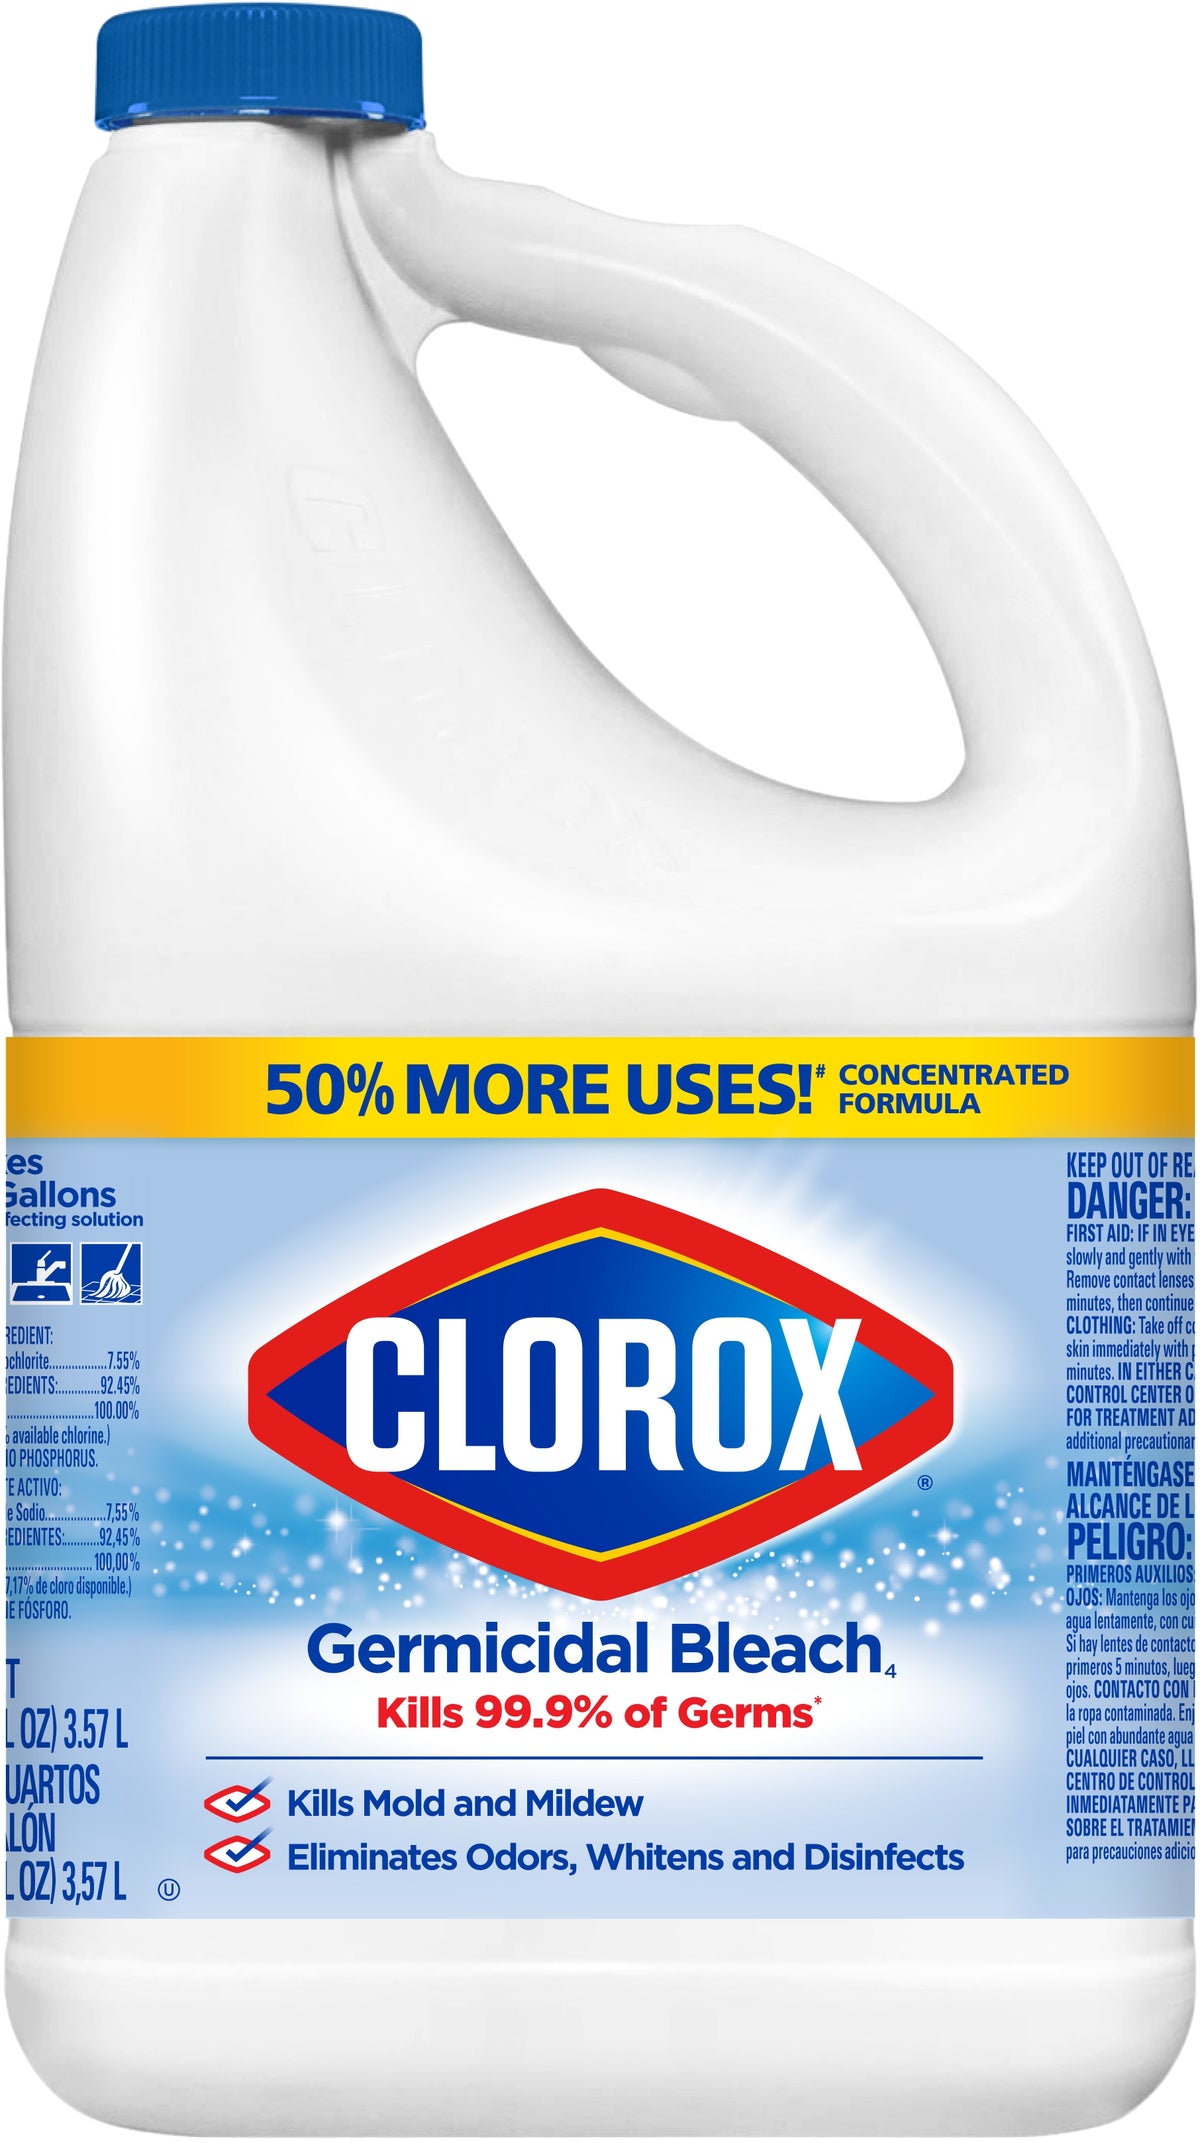 Clorox 32429 Concentrated Germicidal Liquid Bleach Cleaner, 121 Oz